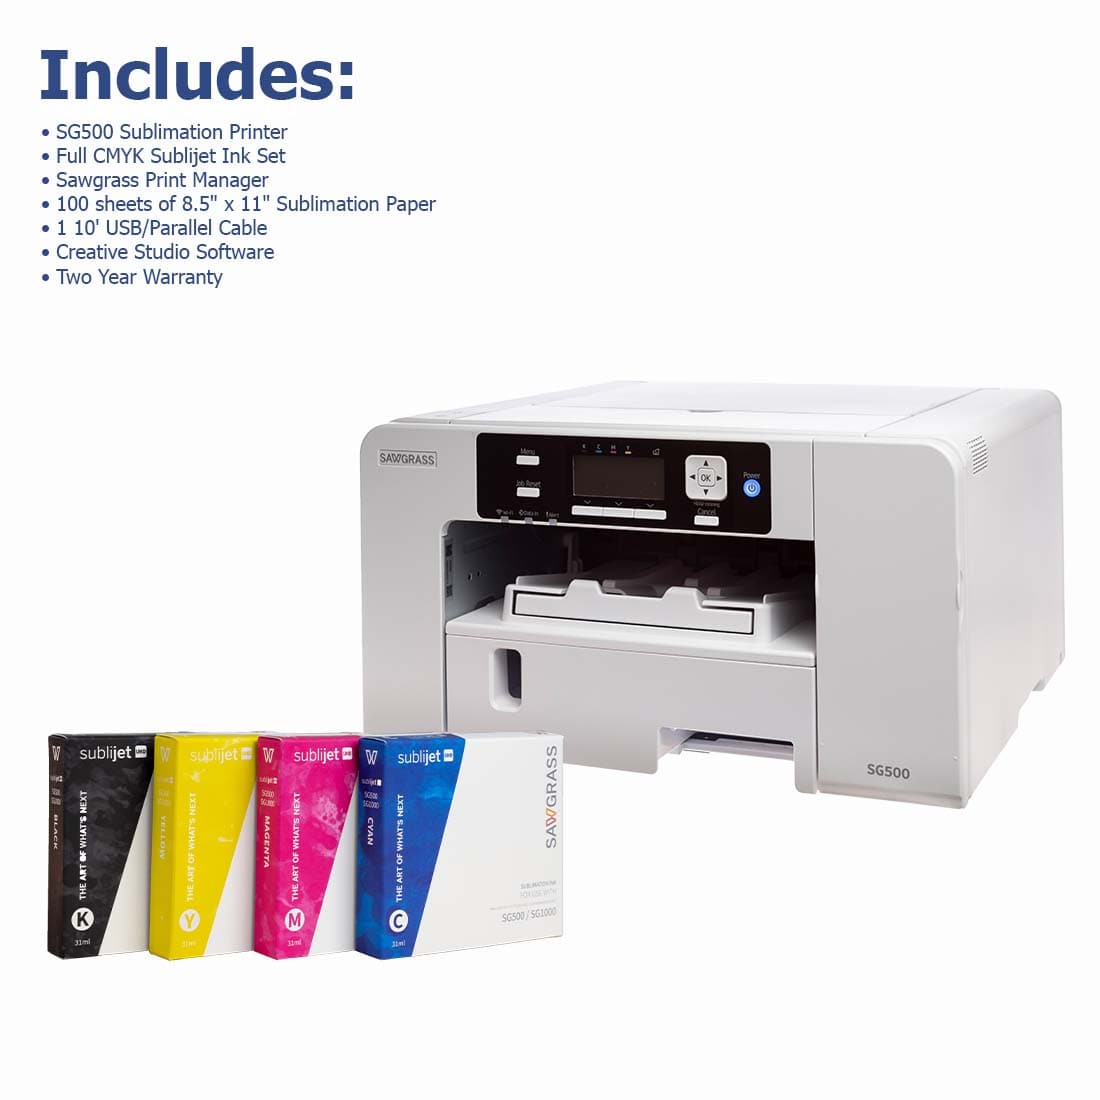 Sawgrass Virtuoso SG500 Sublimation Printer Package - Joto Imaging Supplies US